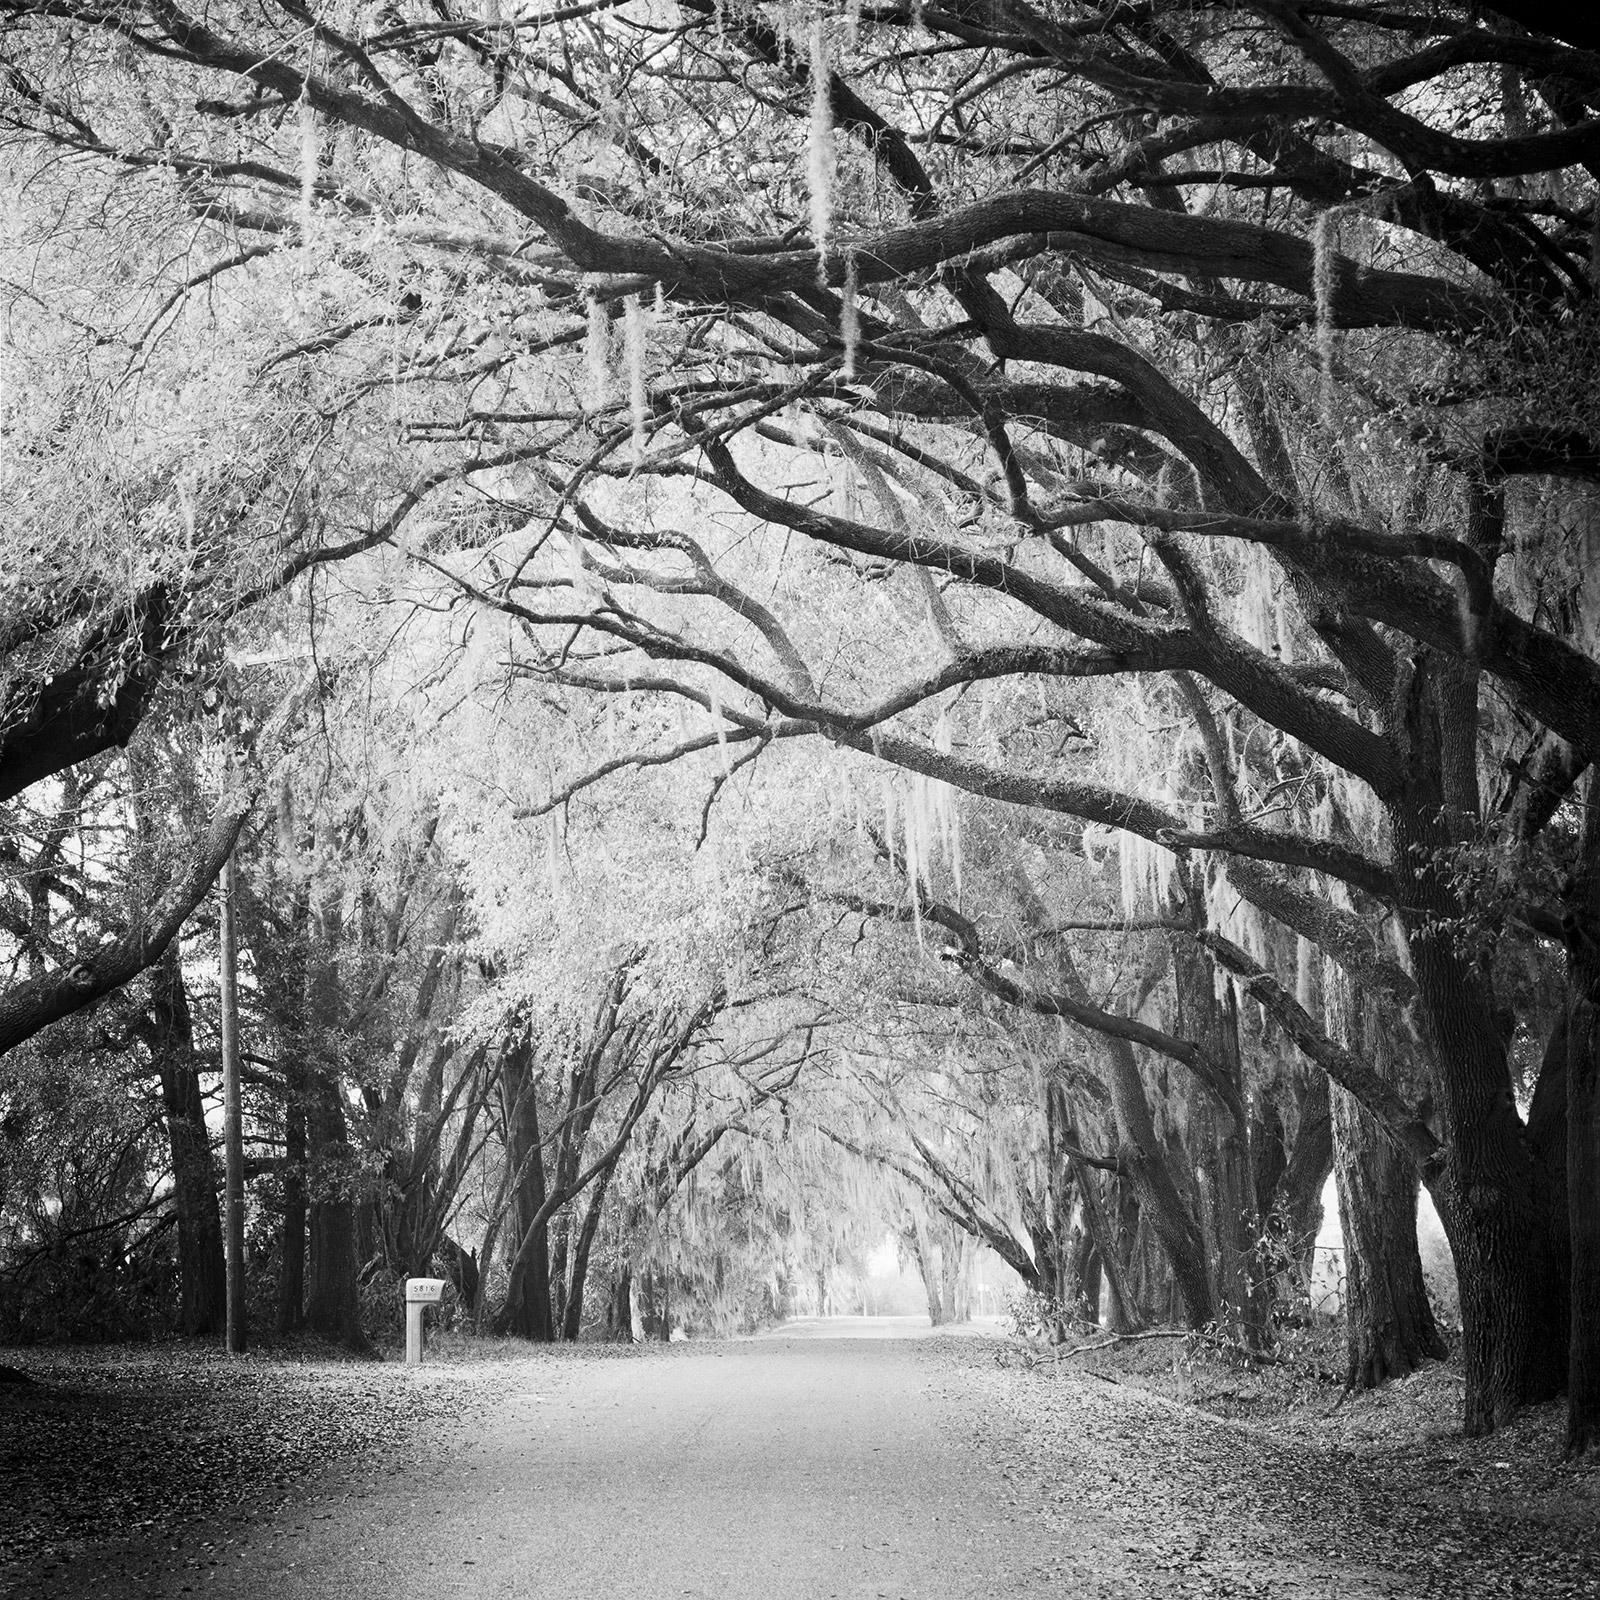 Gerald Berghammer, Ina Forstinger Landscape Photograph - Fairytale Forest, Tree Avenue, Florida, black and white photography, landscape